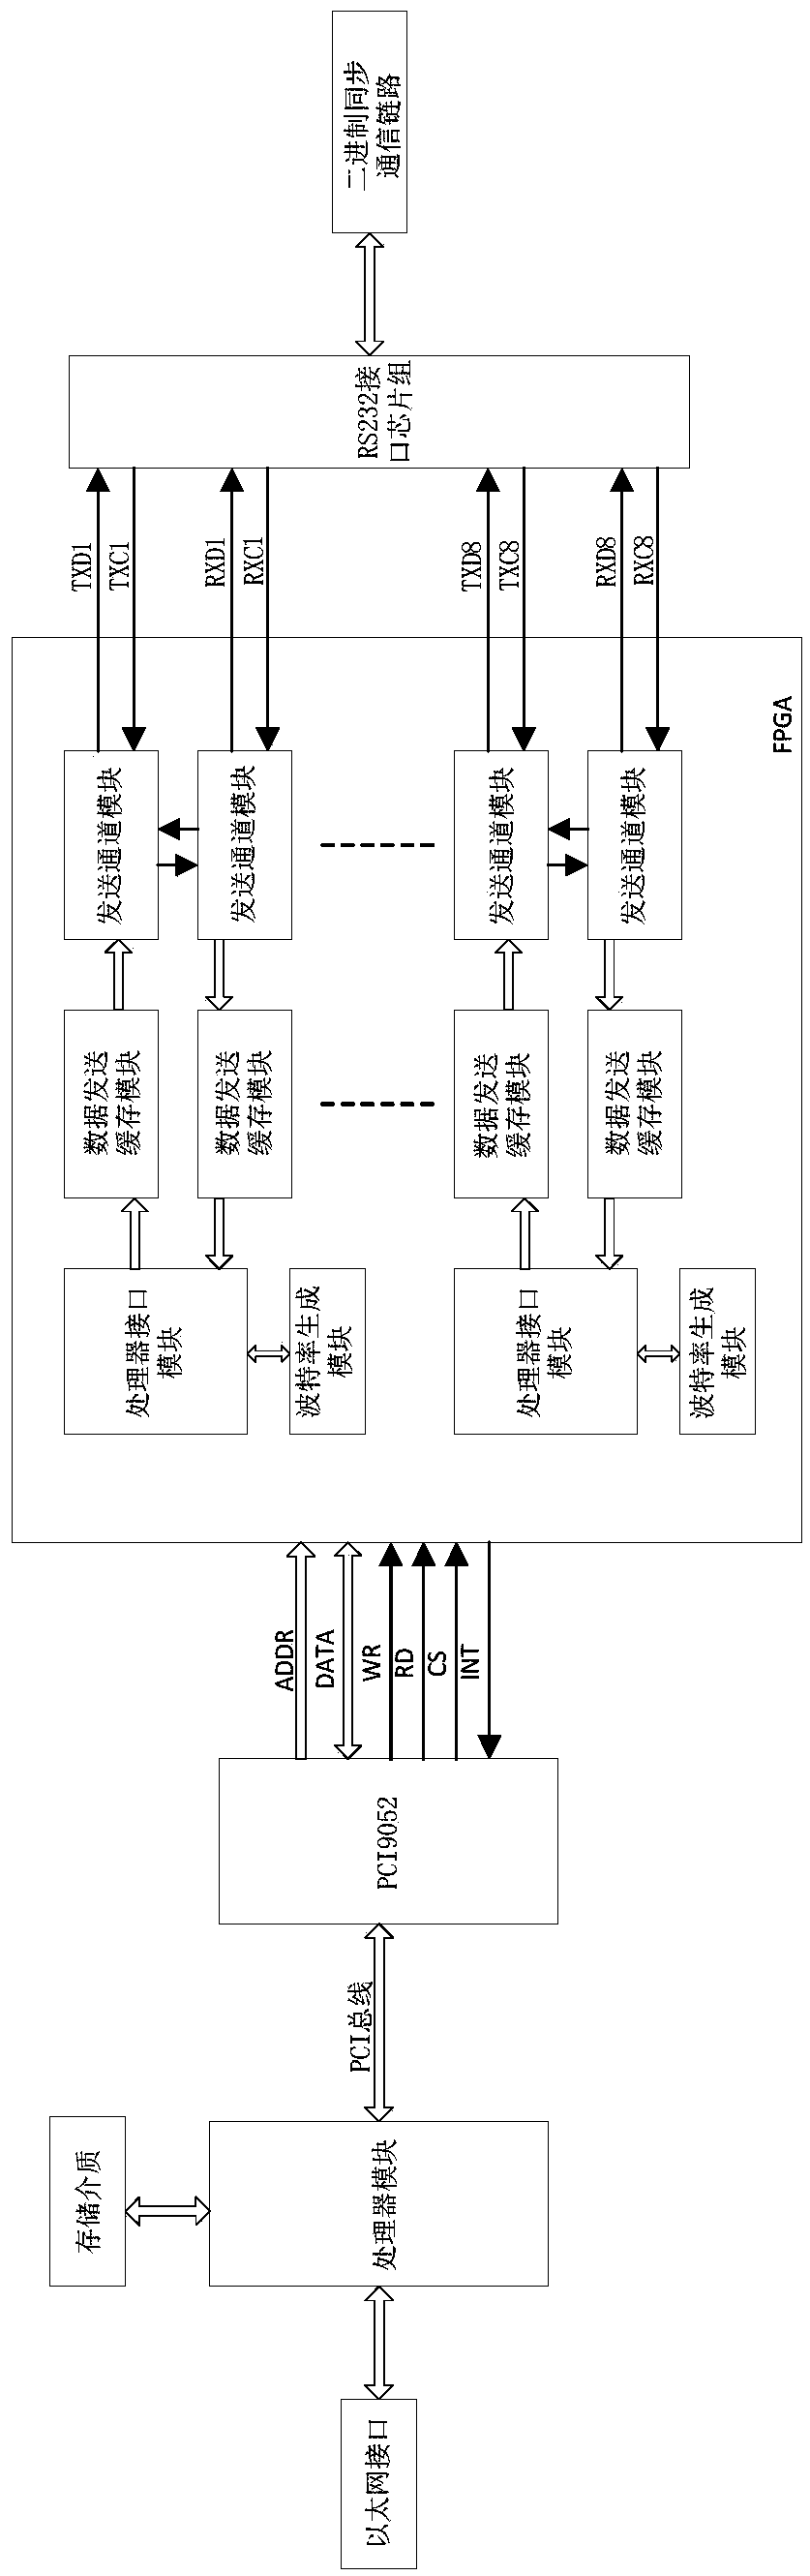 FPGA-based binary synchronization communication protocol controller